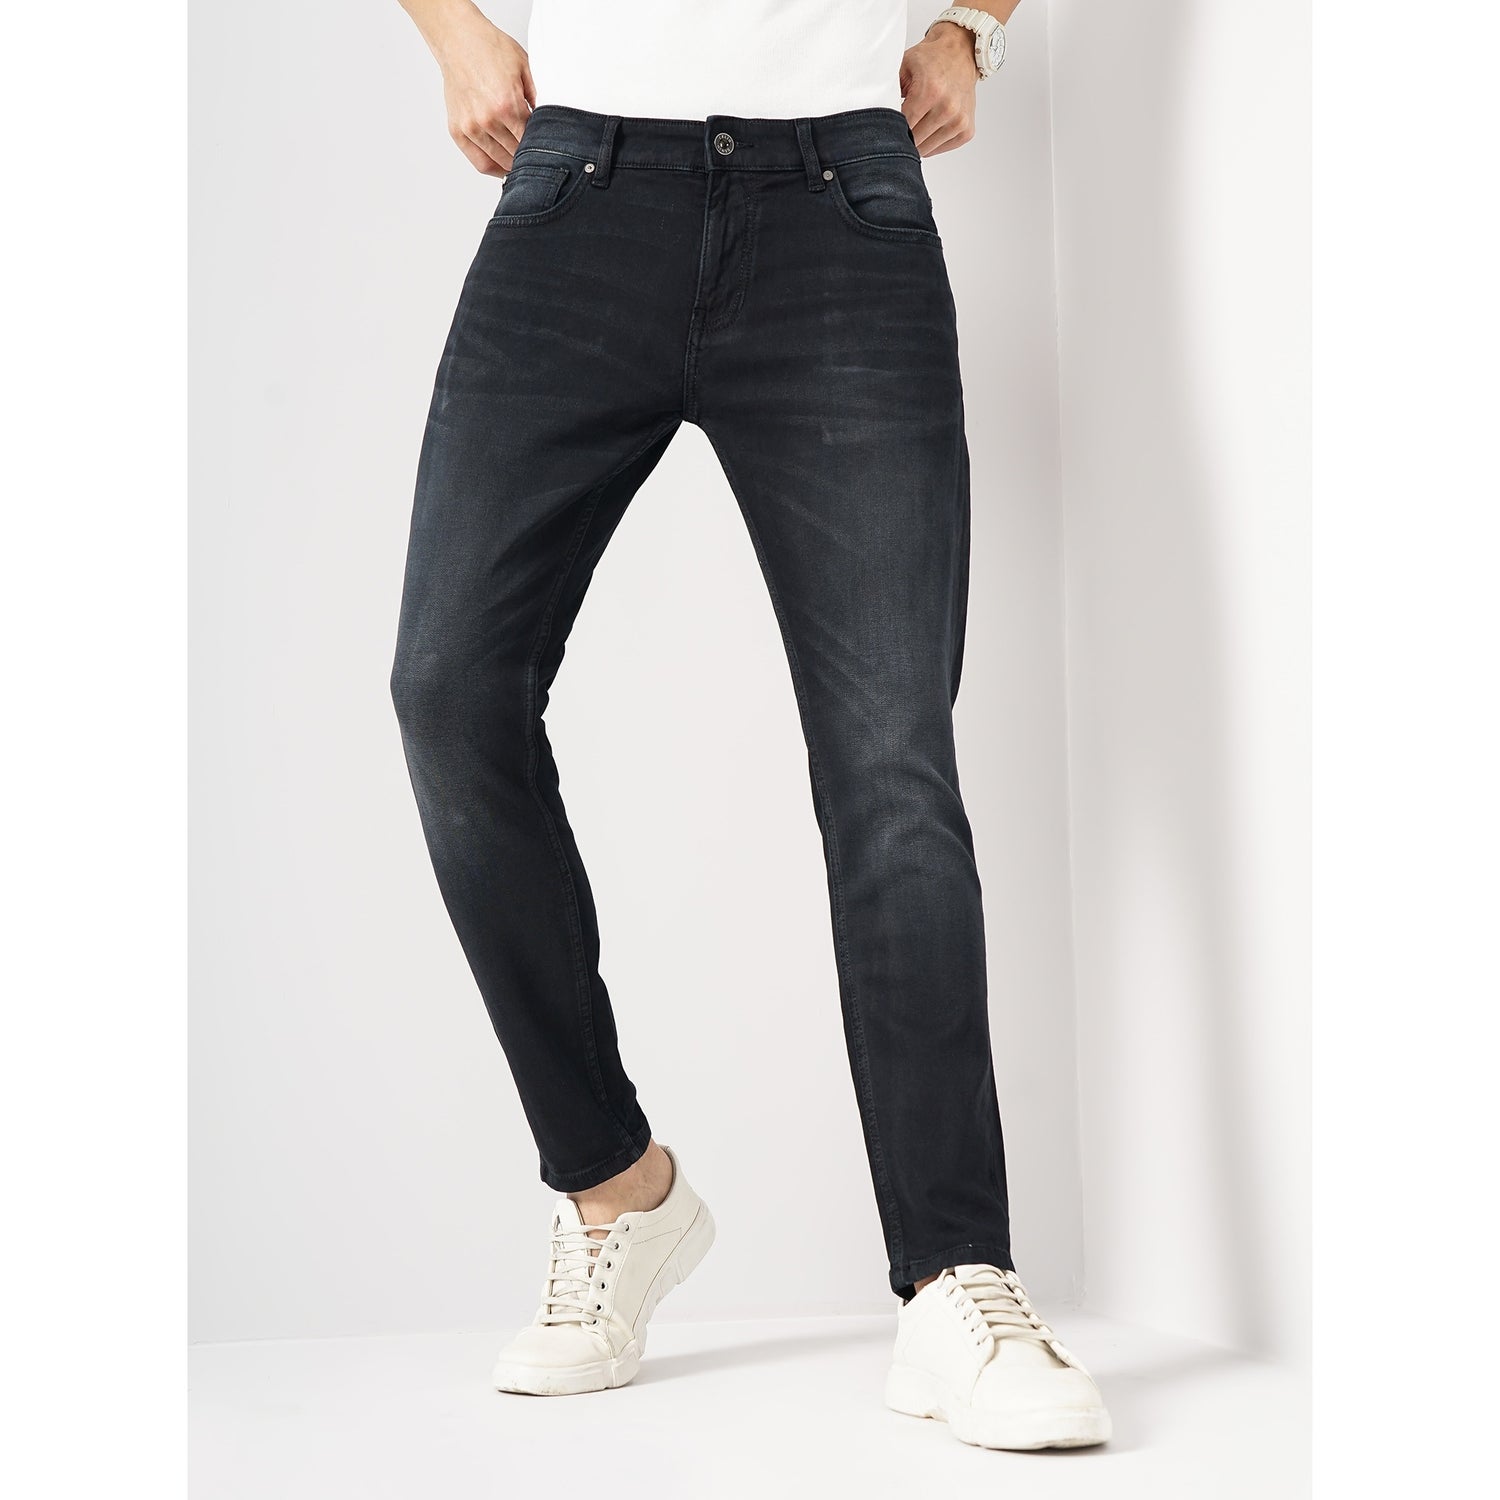 Men Black Solid Skinny Fit Cotton Ankle Length Jeans (GOANKLE1)